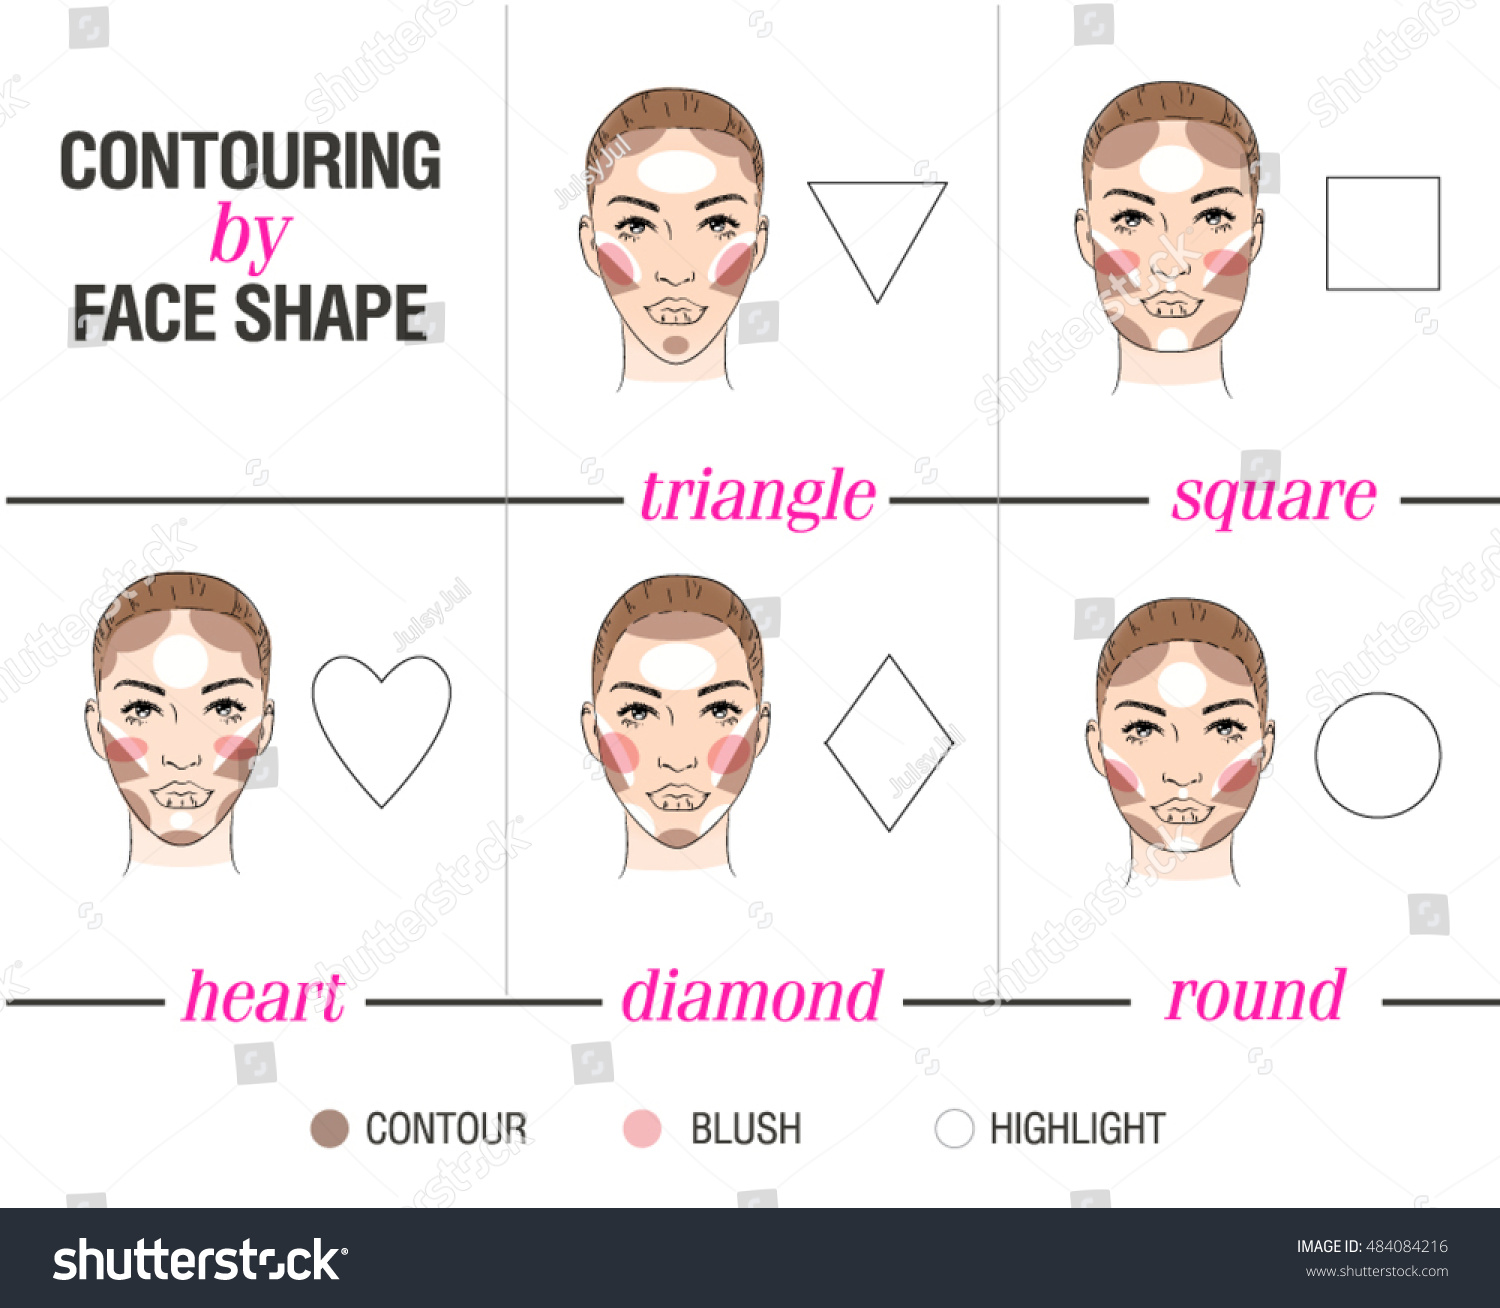 Square face Shape face Chart